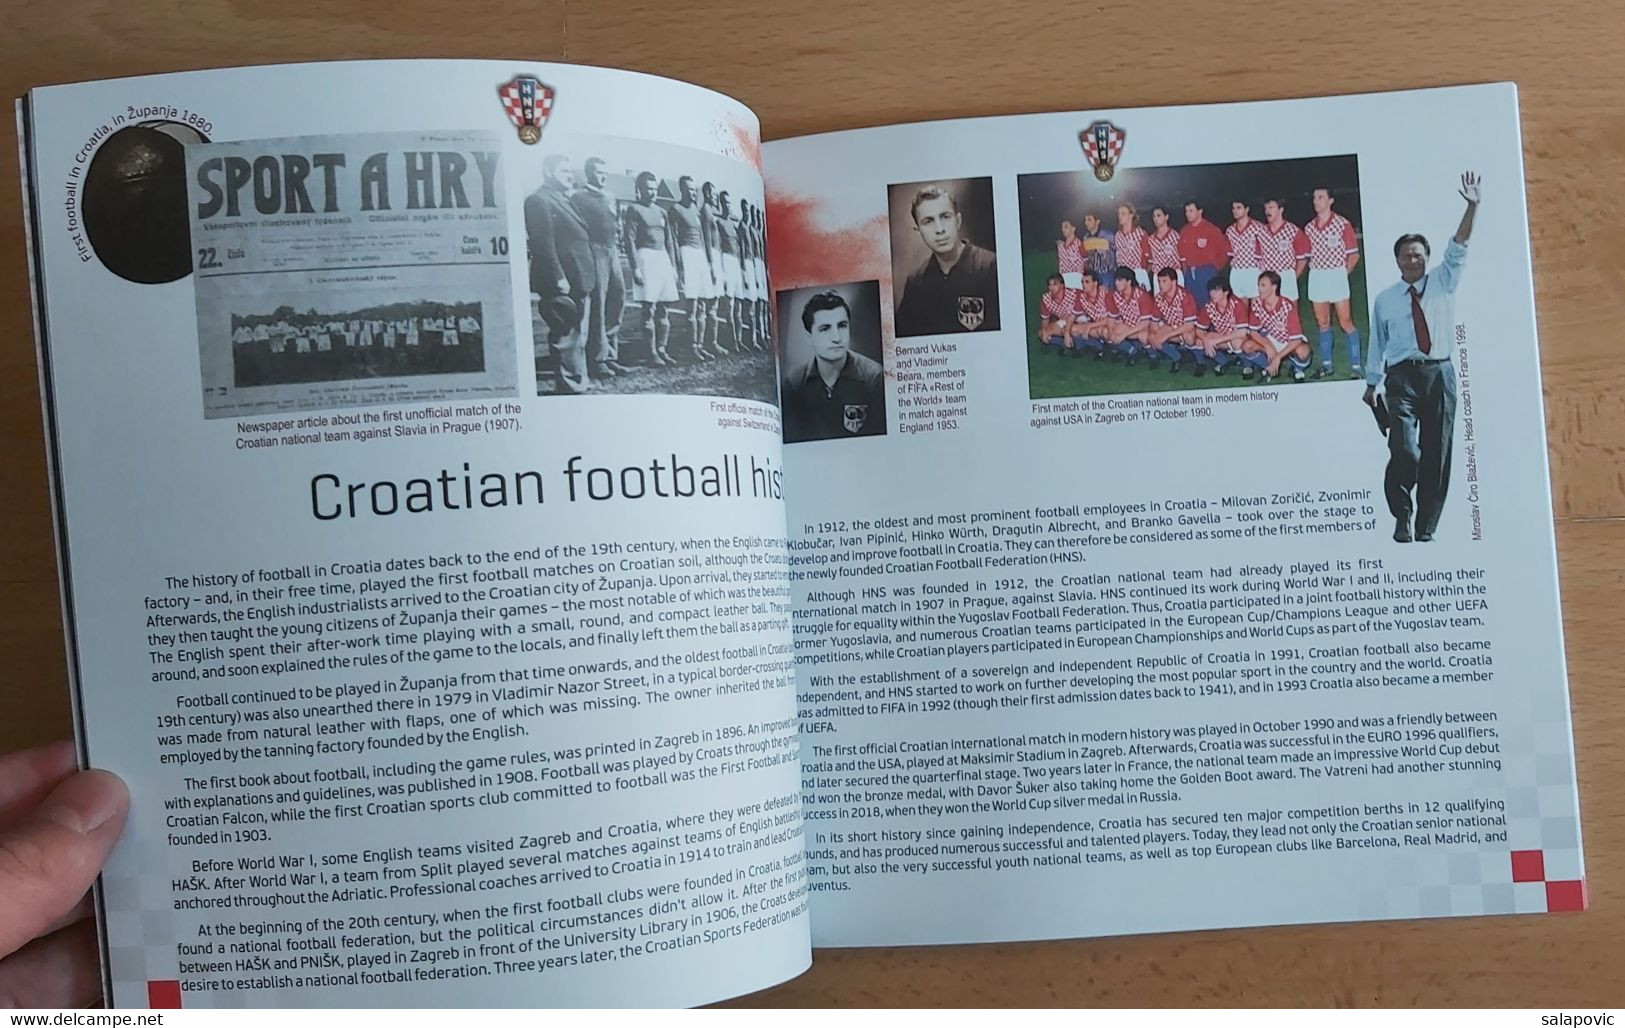 CROATIA National Football Team U - 21 2019 UEFA U - 21 EUROPEAN CHAMPIONSHIP FOOTBALL CROATIA FOOTBALL MATCH PROGRAM - Books